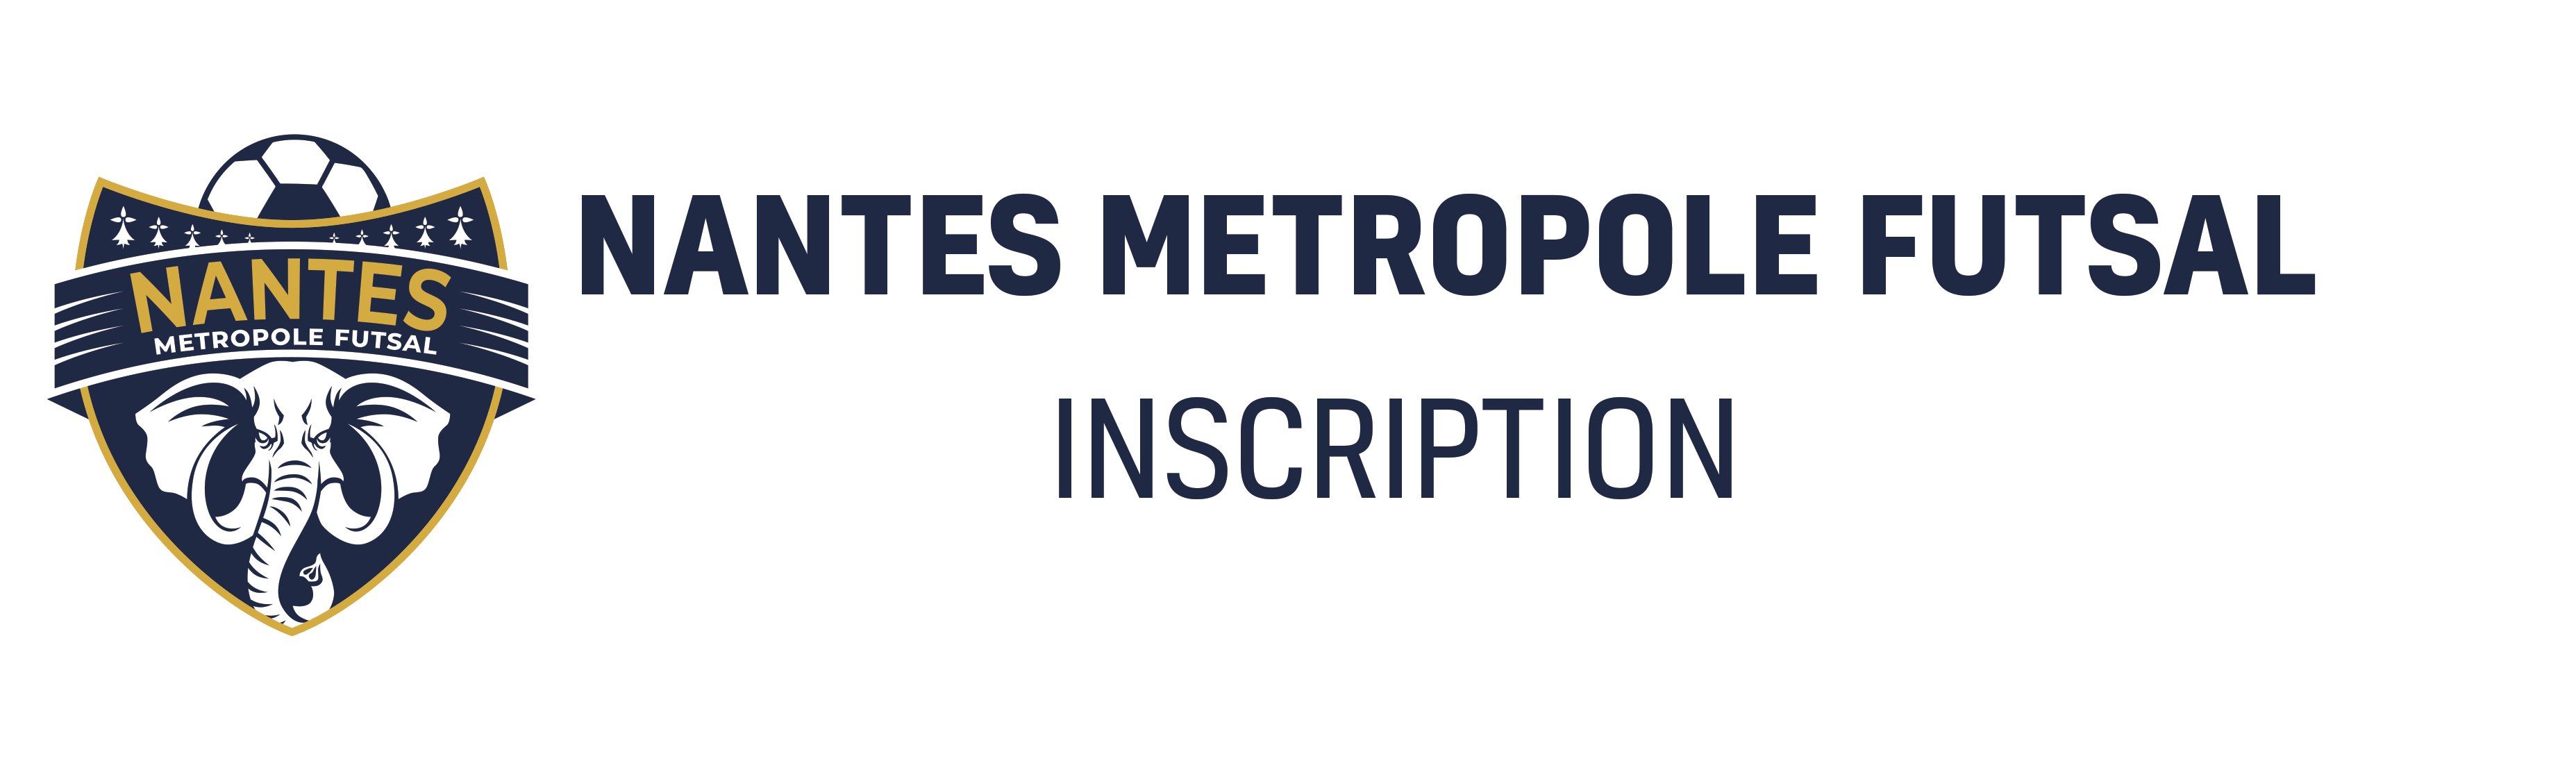 Nantes Métropole Futsal